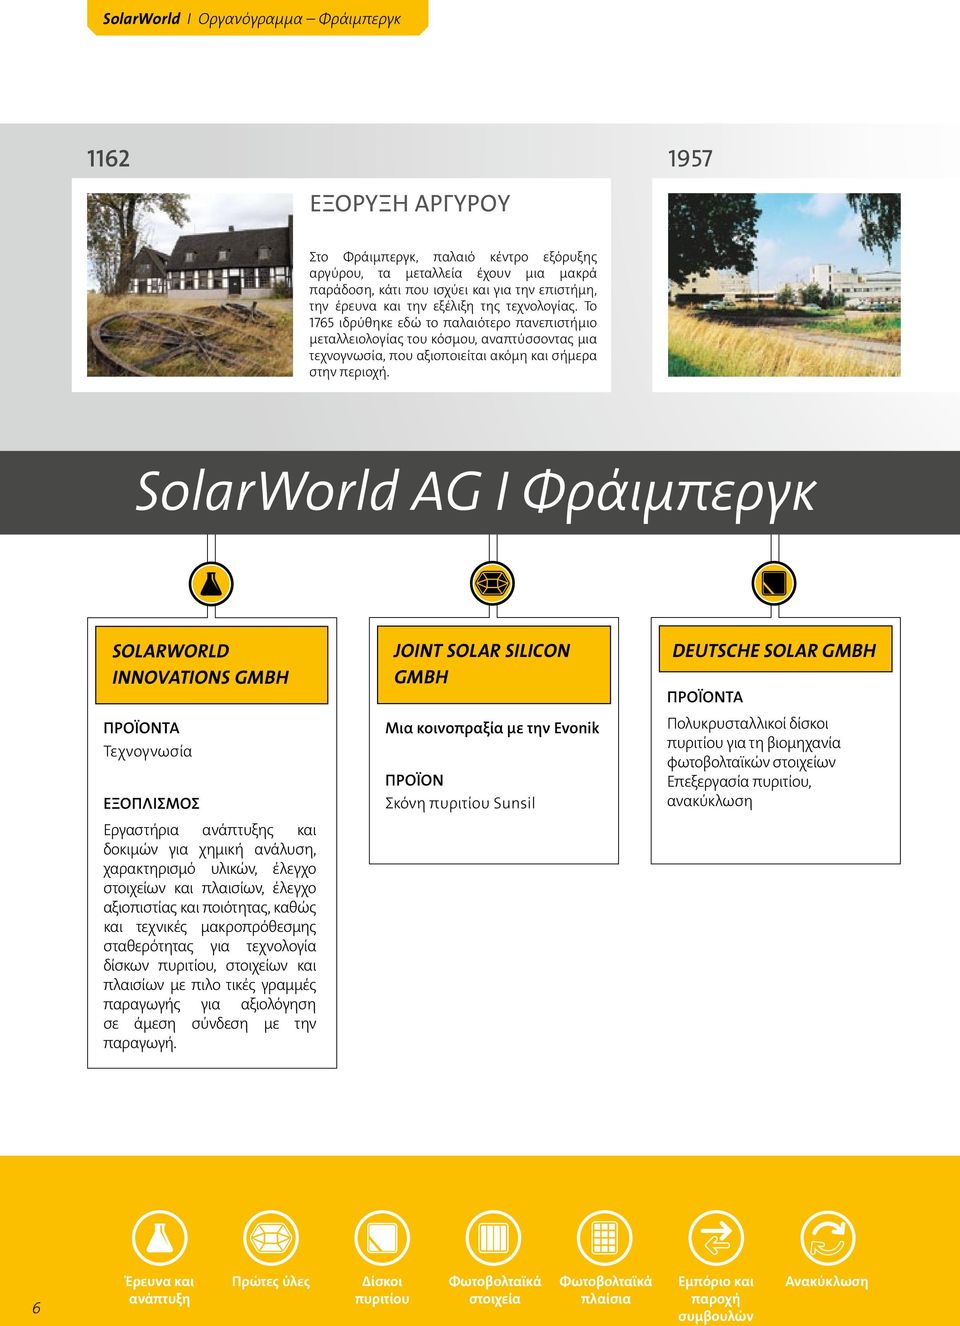 SolarWorld AG I Φράιμπεργκ Solarworld innovations gmbh Προϊόντα Τεχνογνωσία Εξοπλισμός Εργαστήρια ανάπτυξης και δοκιμών για χημική ανάλυση, χαρακτηρισμό υλικών, έλεγχο στοιχείων και πλαισίων, έλεγχο